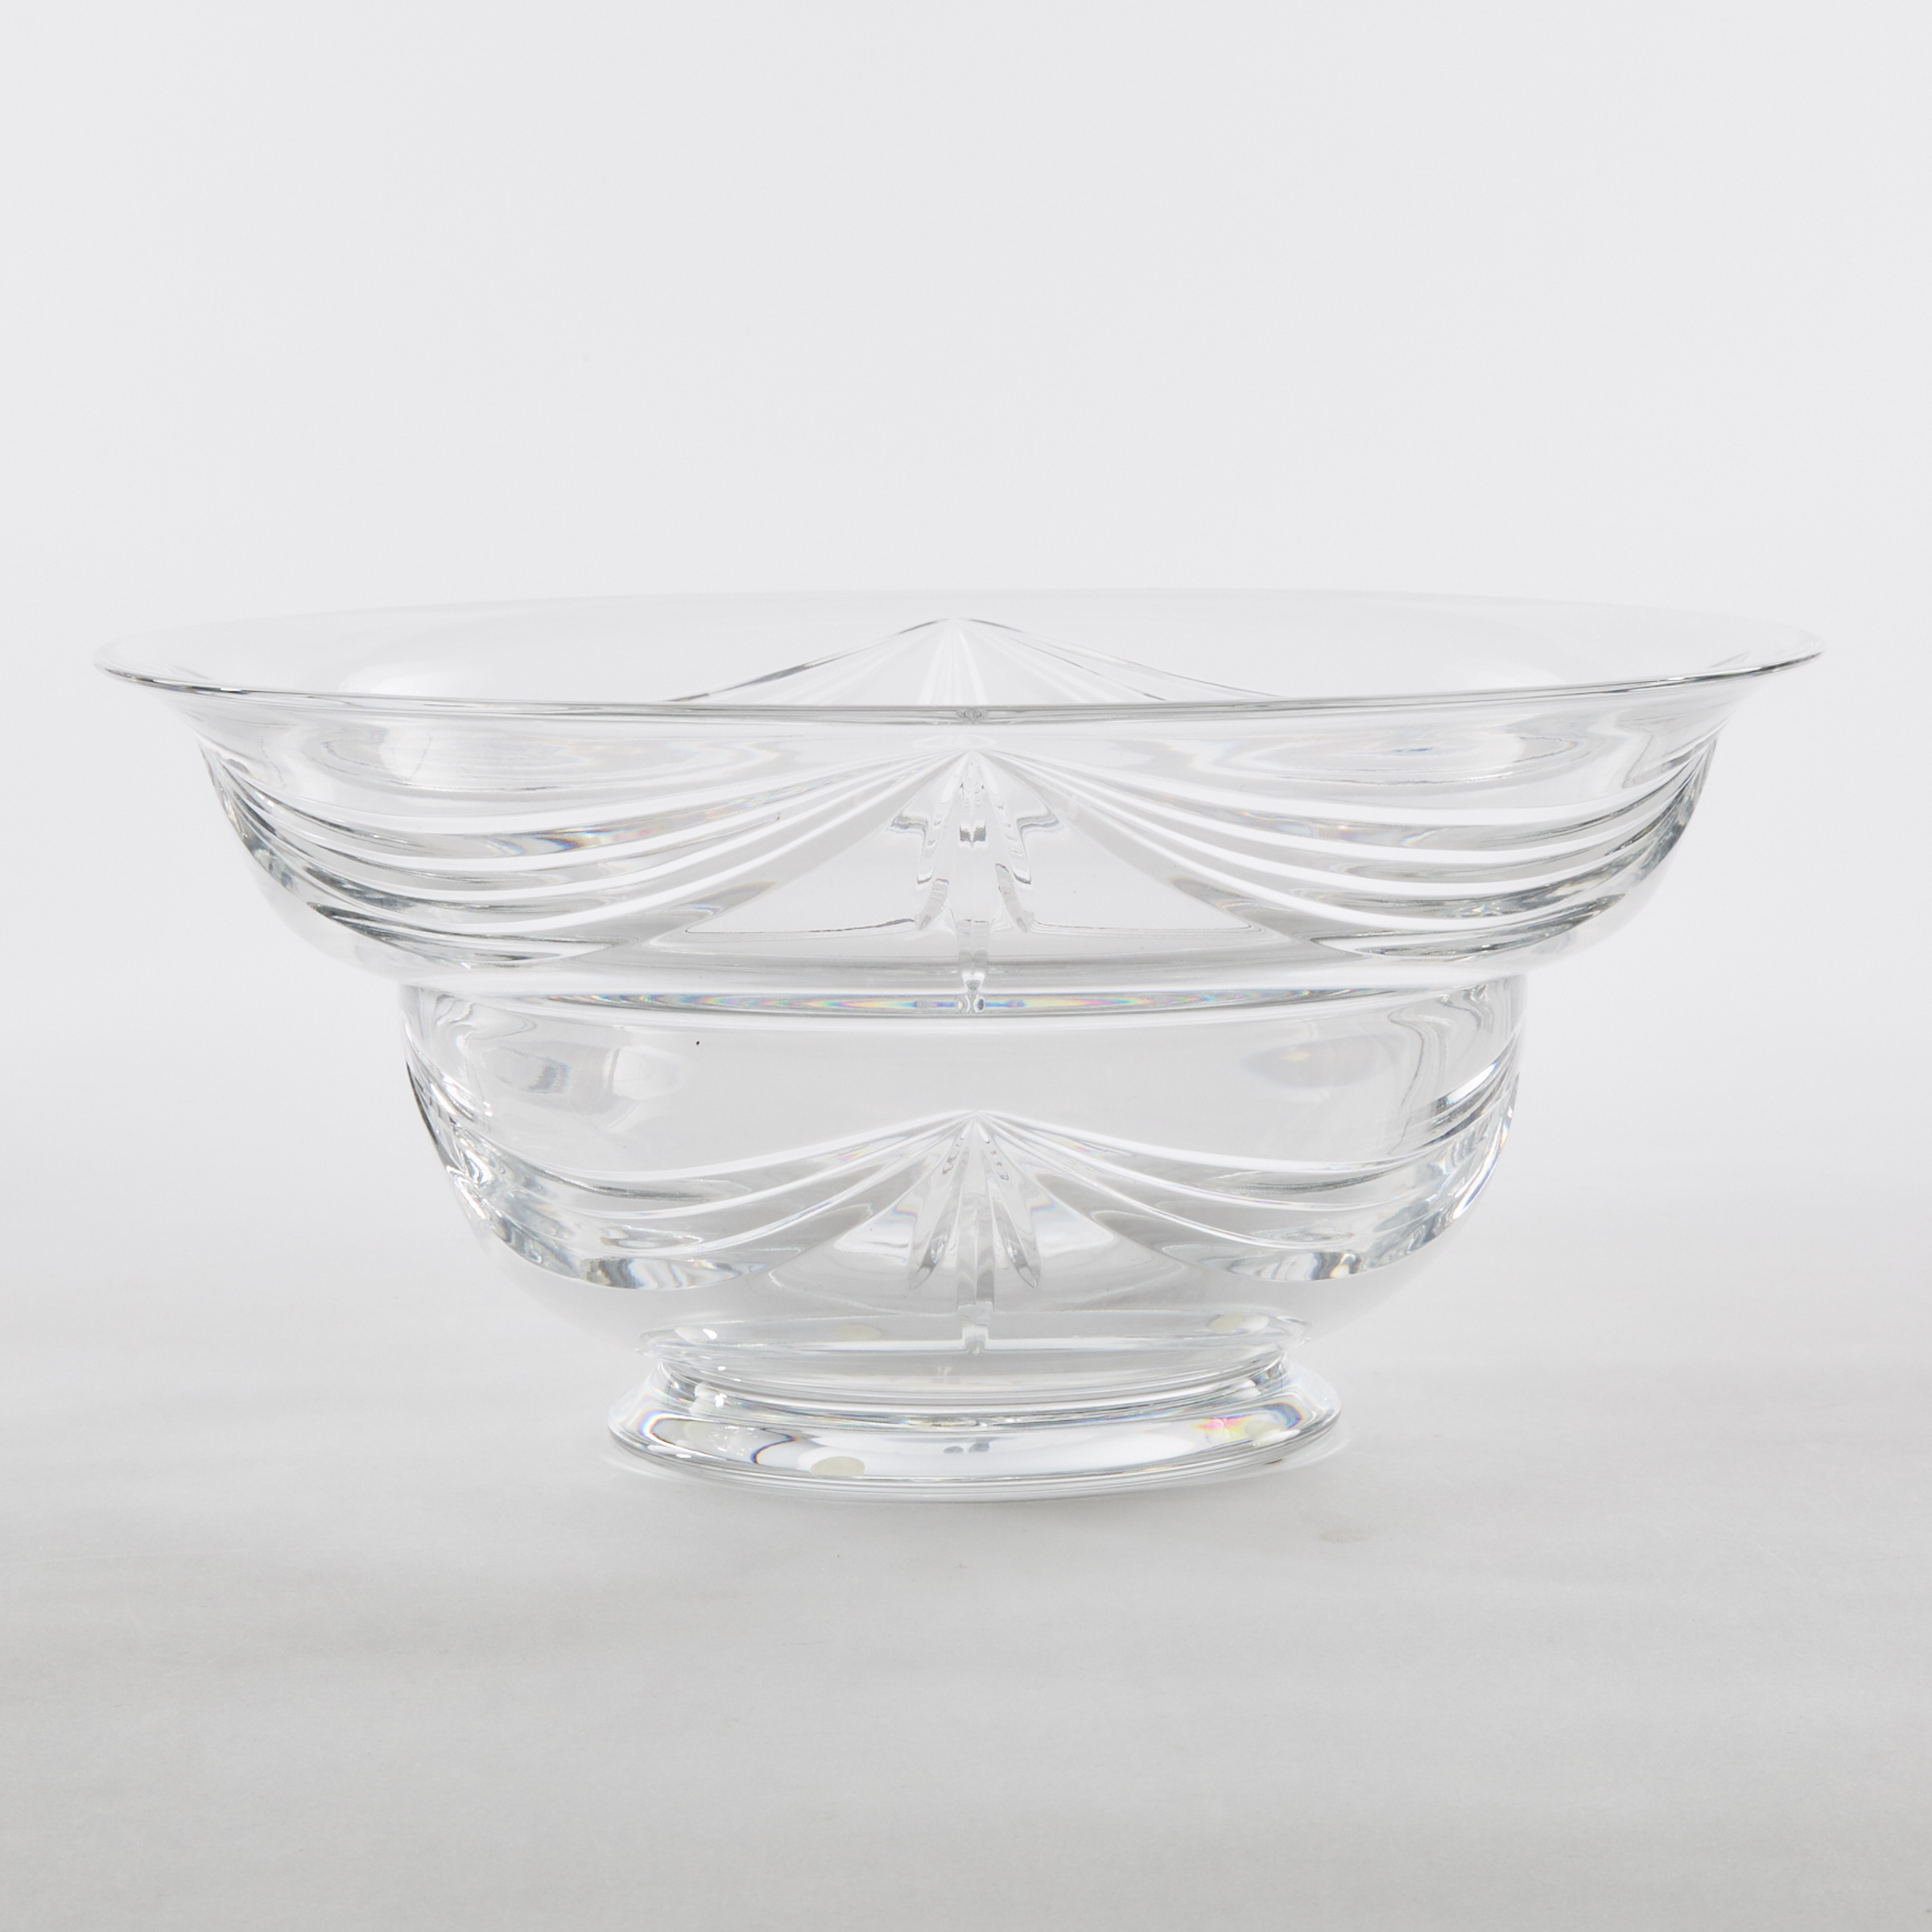 Baccarat Large Cut Glass Bowl, 20th century